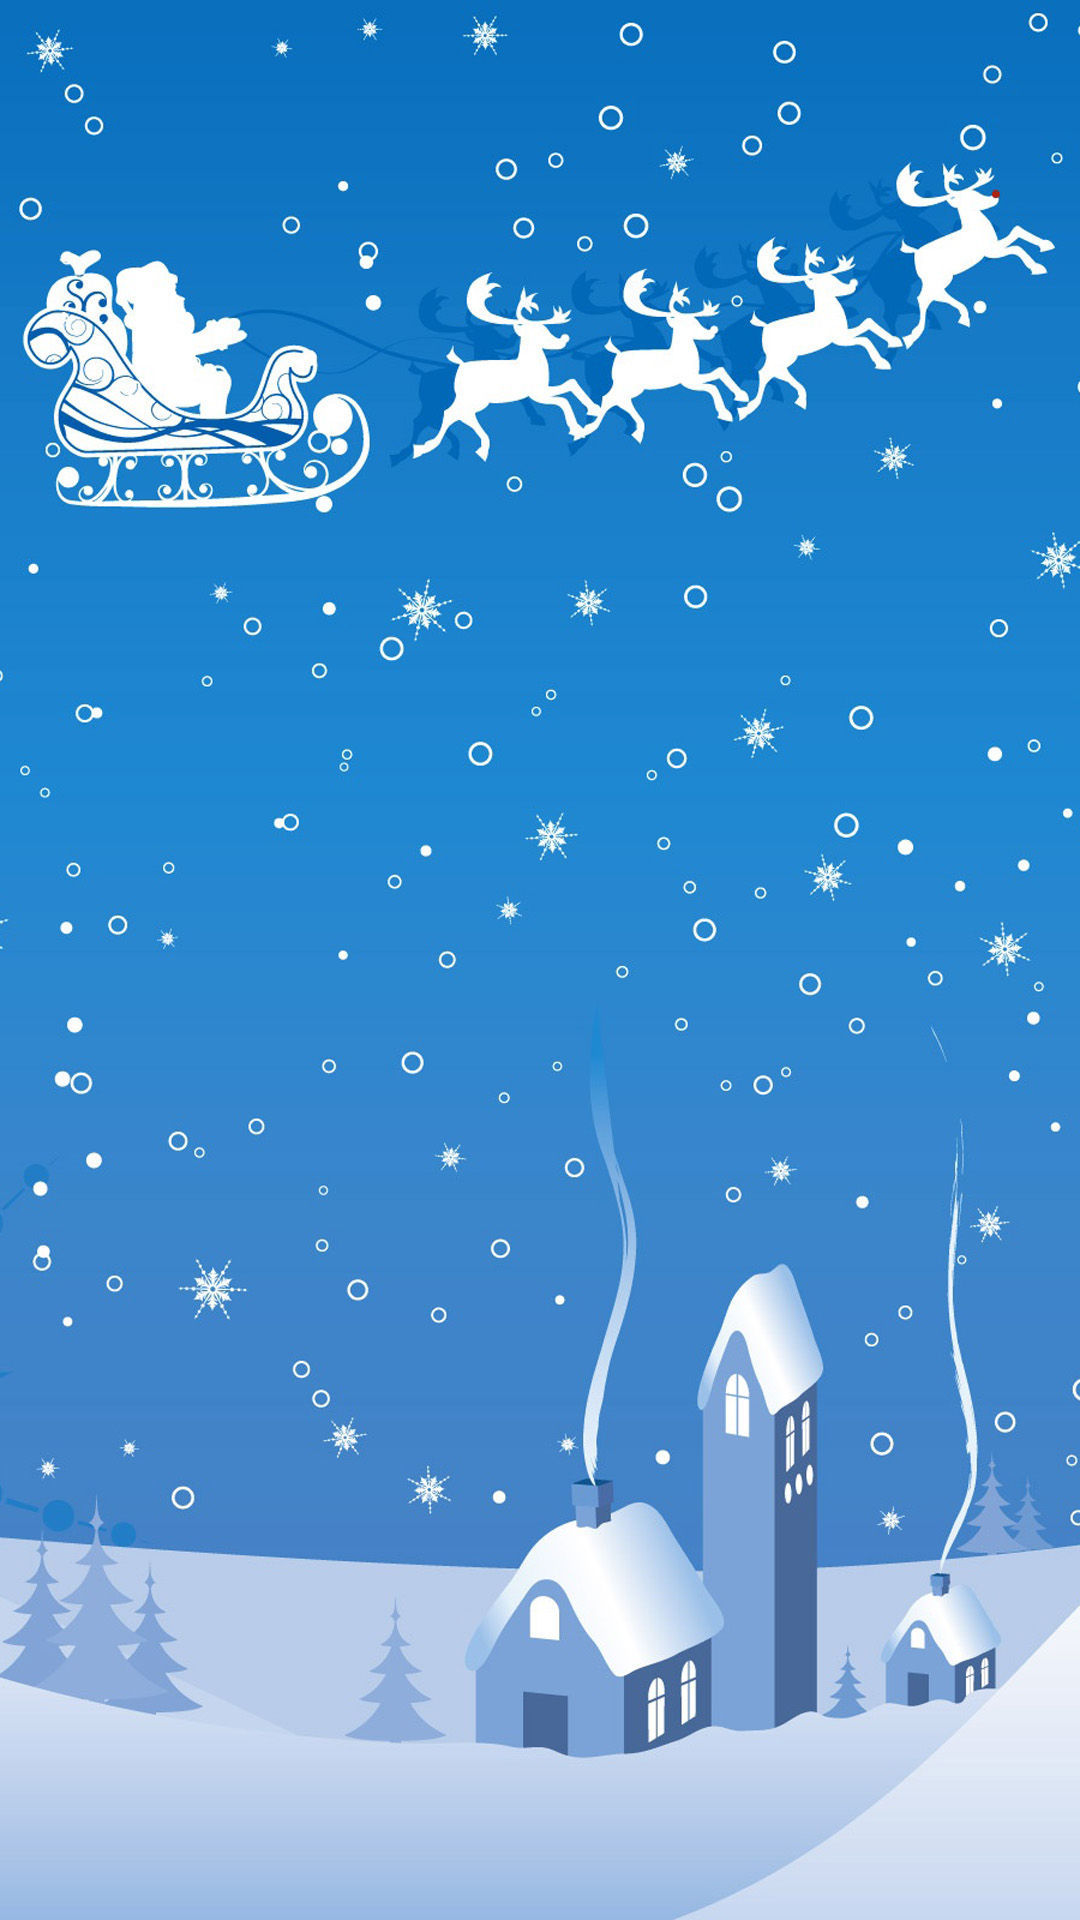 wallpaper theme image,illustration,christmas eve,sky,fictional character,winter